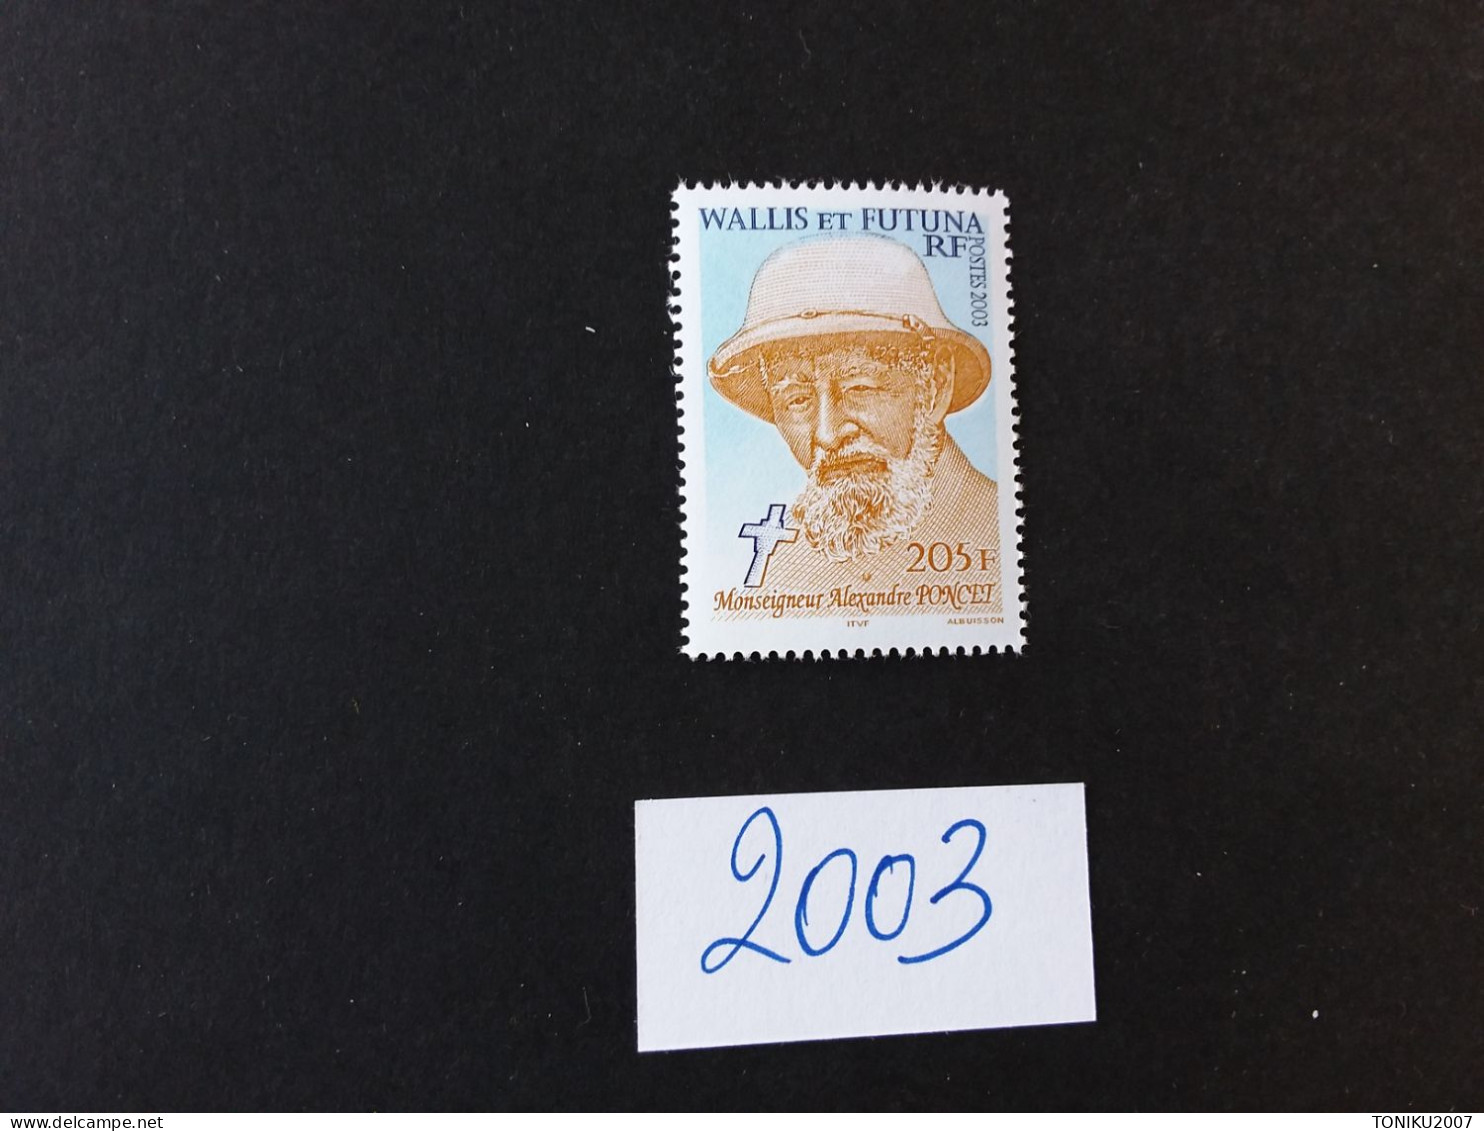 WALLIS ET FUTUNA 2003** - MNH - Unused Stamps